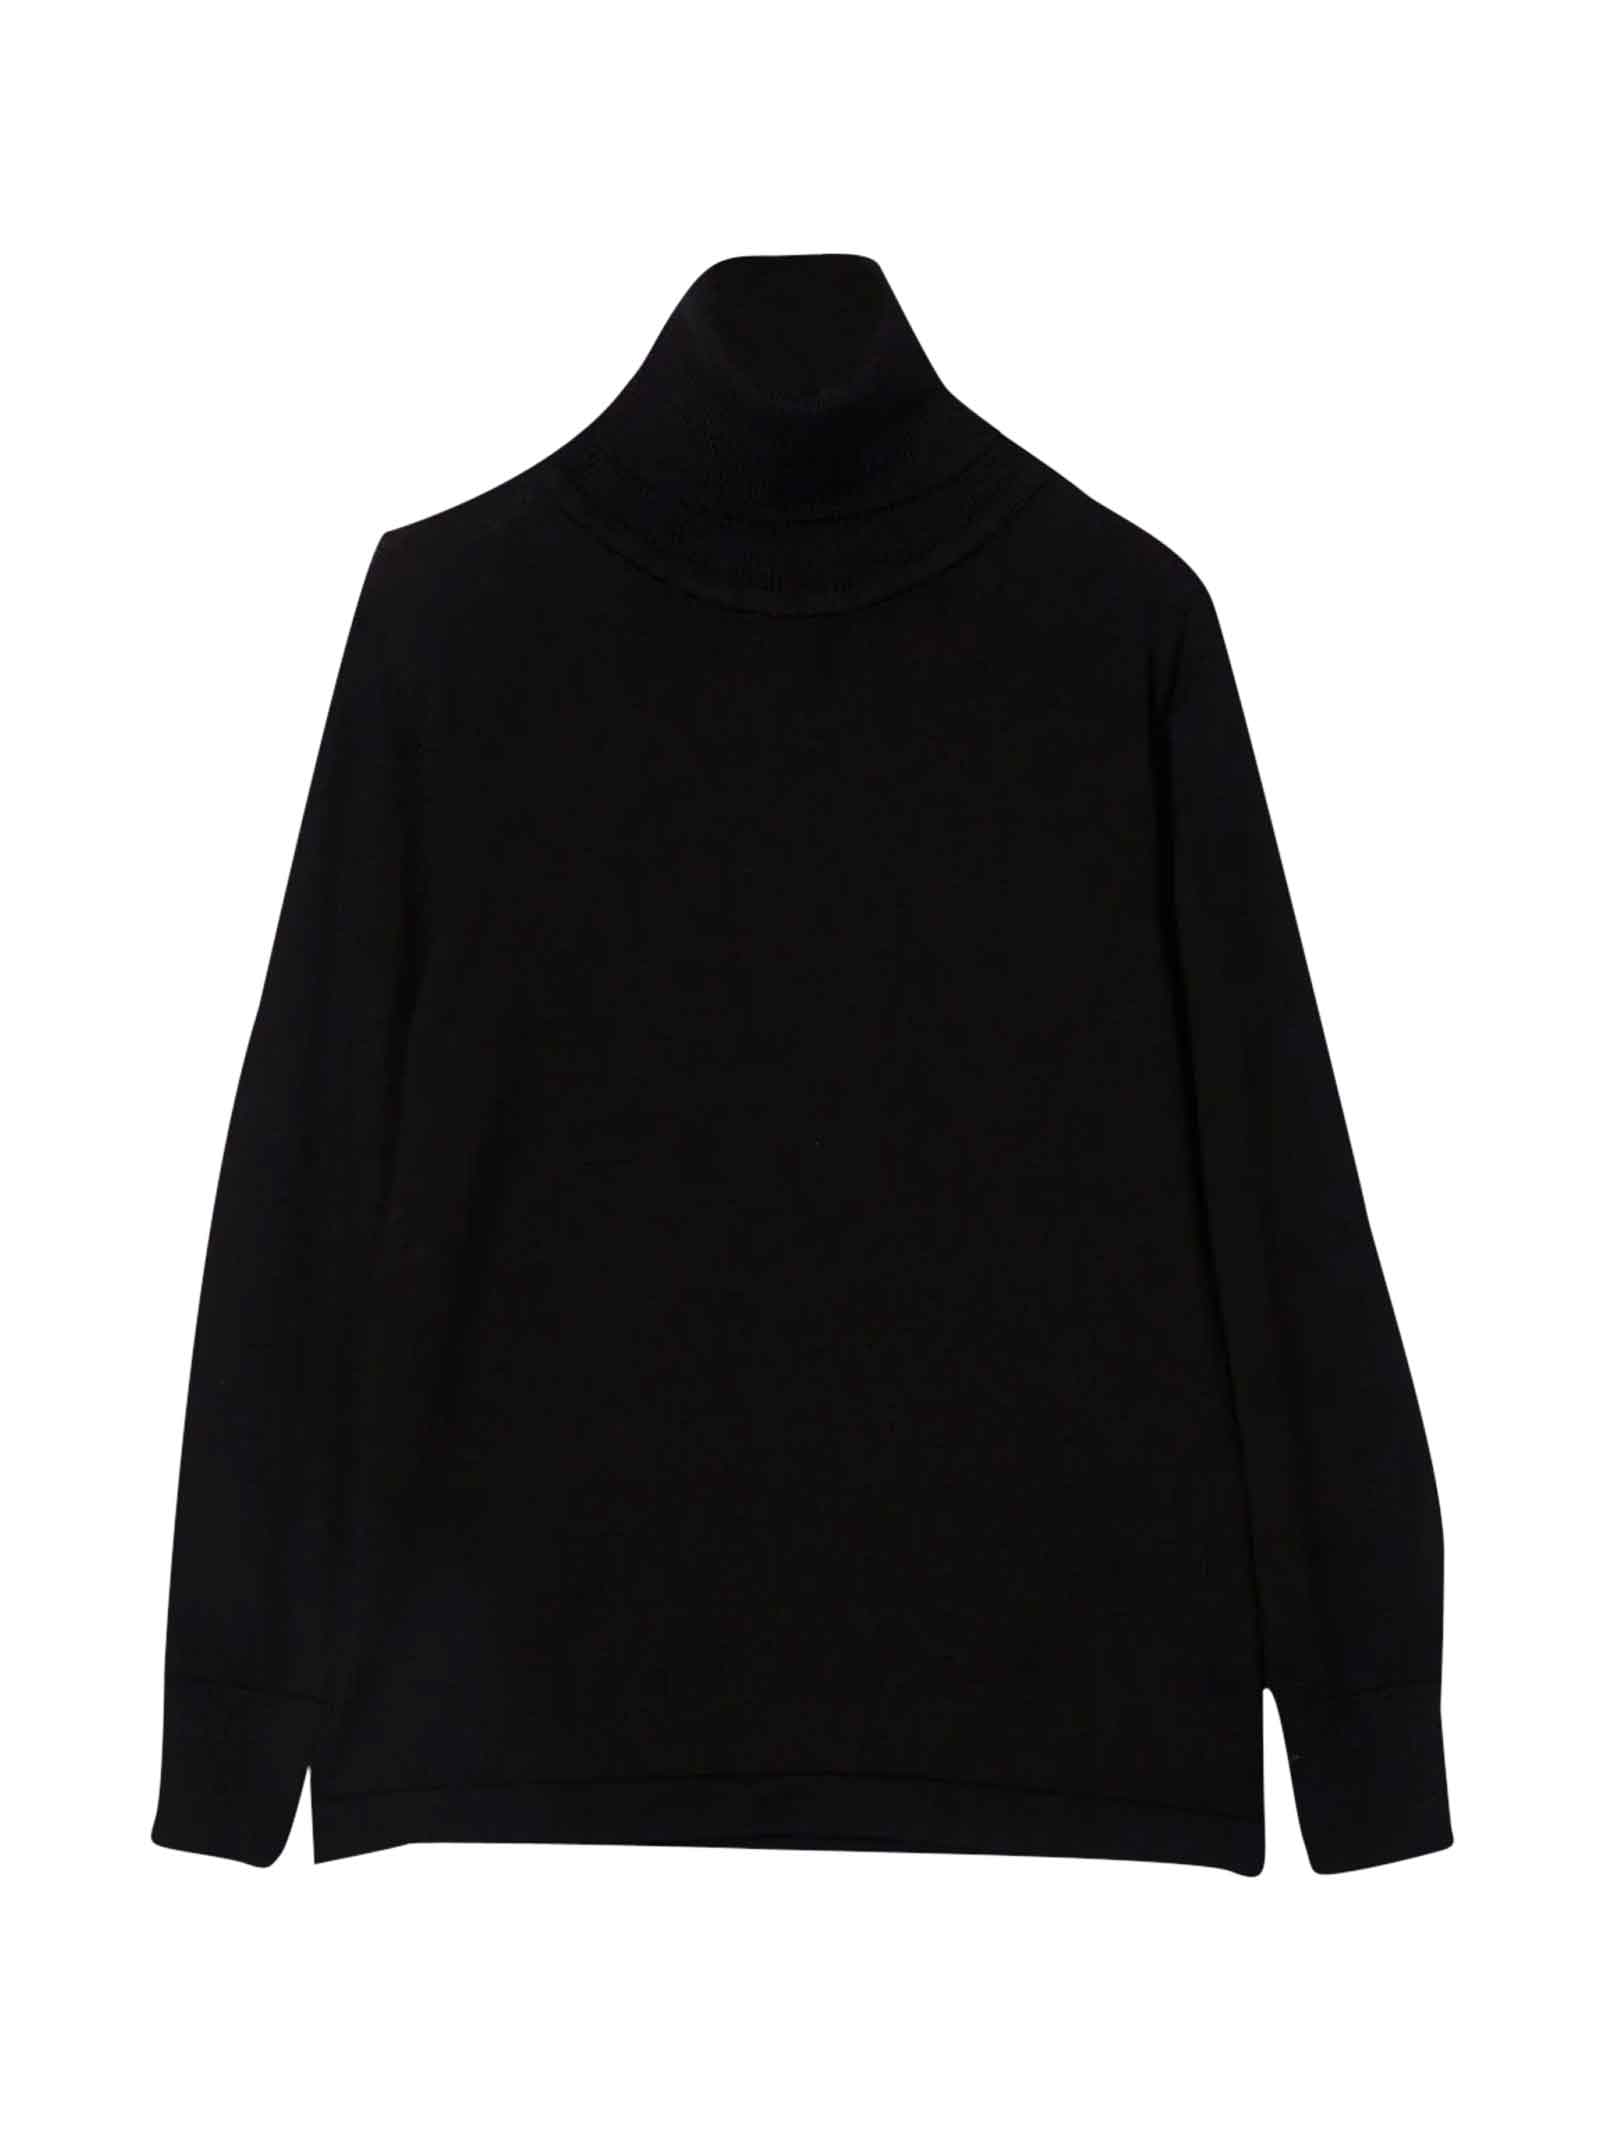 Balmain Black Sweater